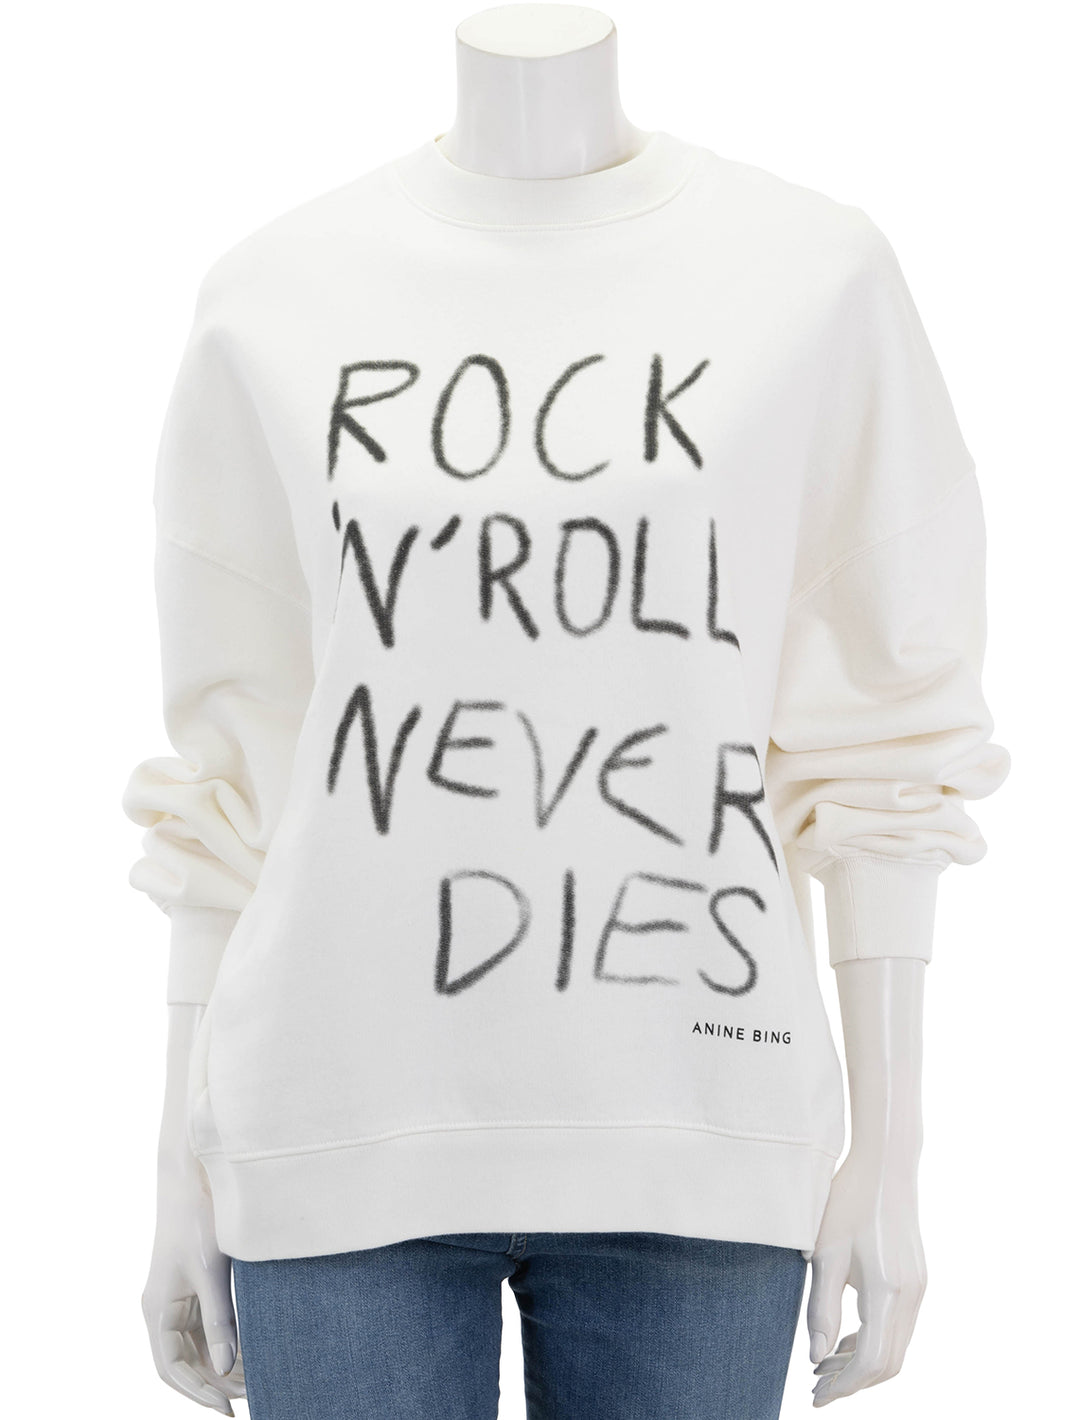 Front view of Anine Bing's rock n roll never dies miles sweatshirt.